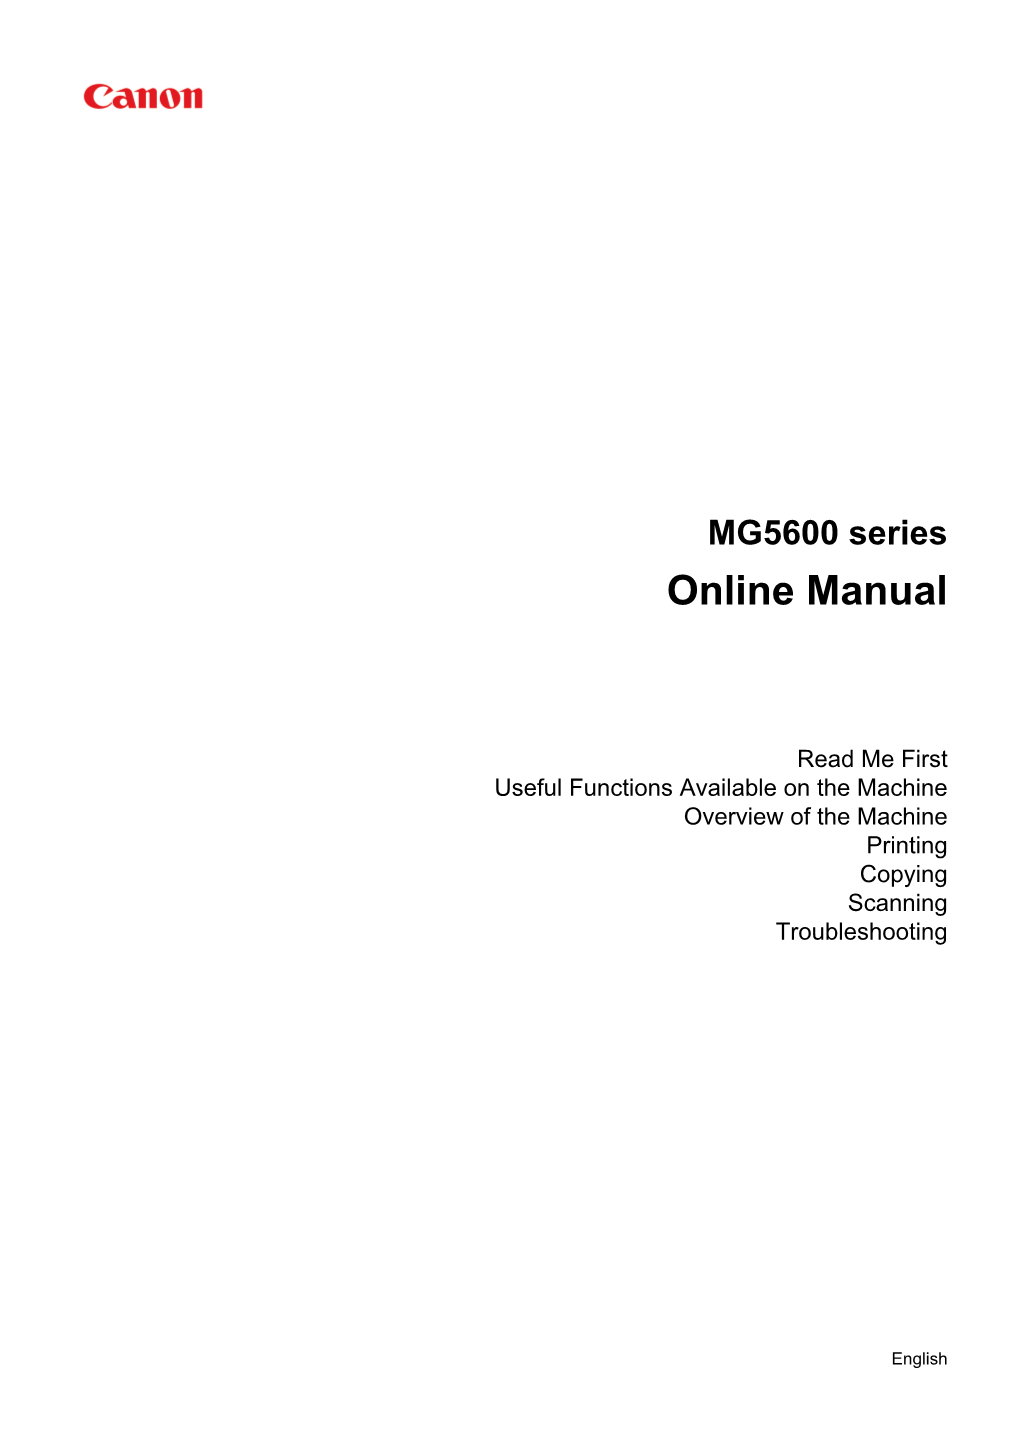 MG5600 Series Online Manual